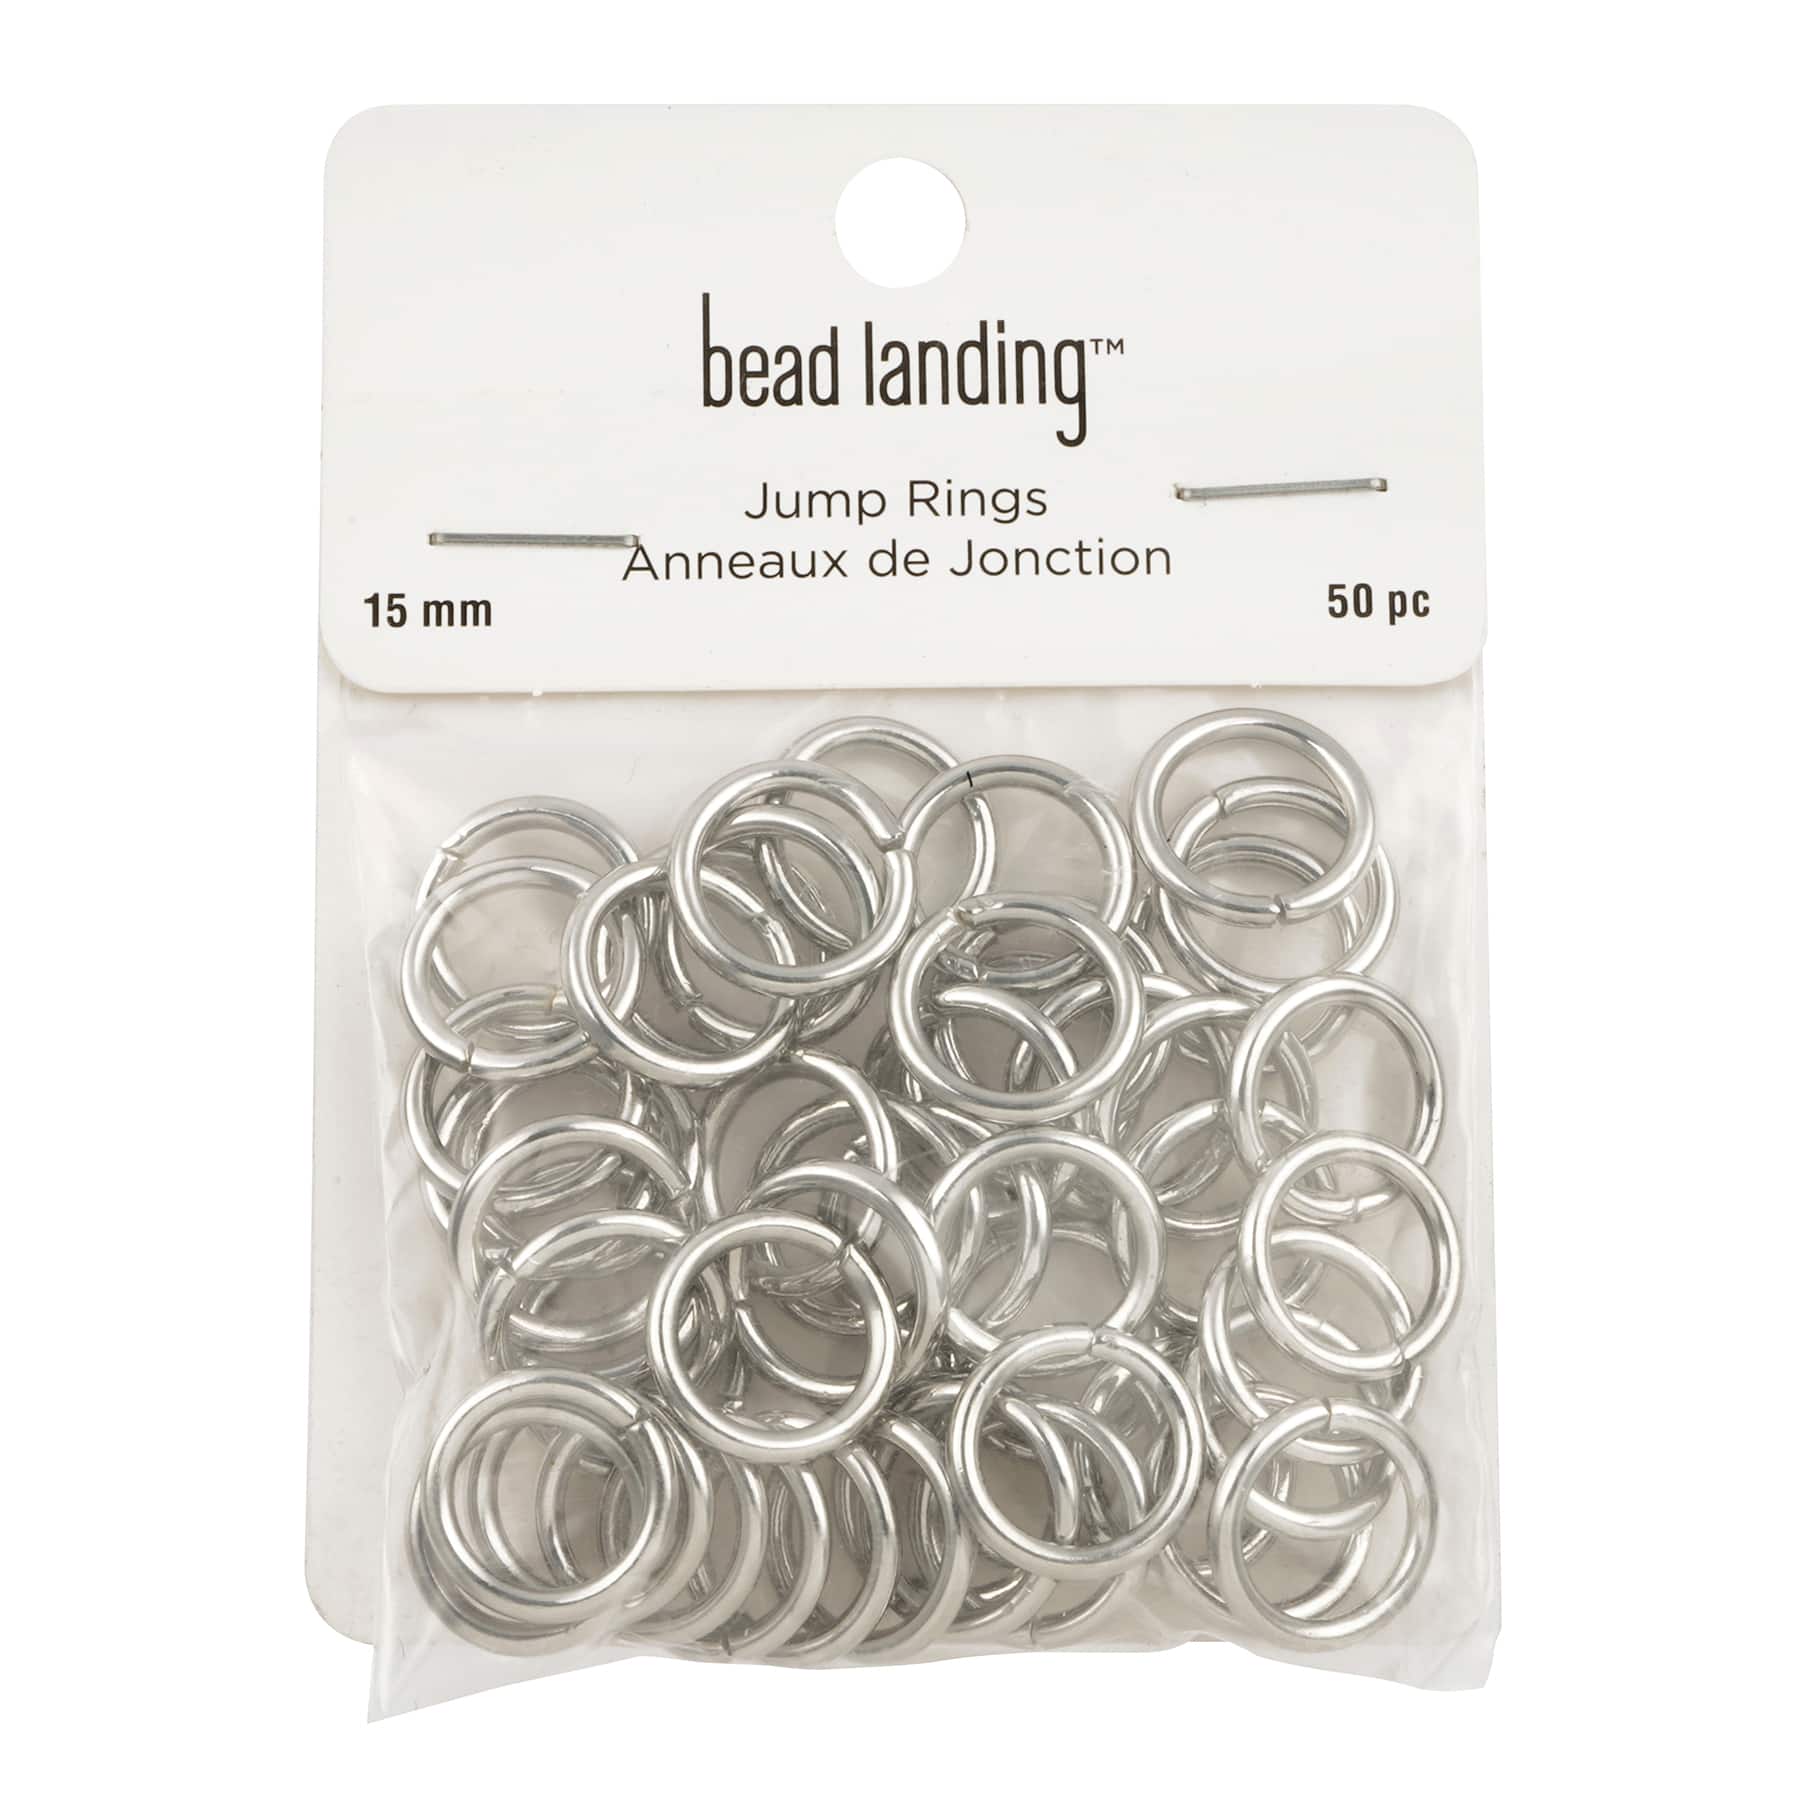 Assorted Filigree Bead Caps by Bead Landing™